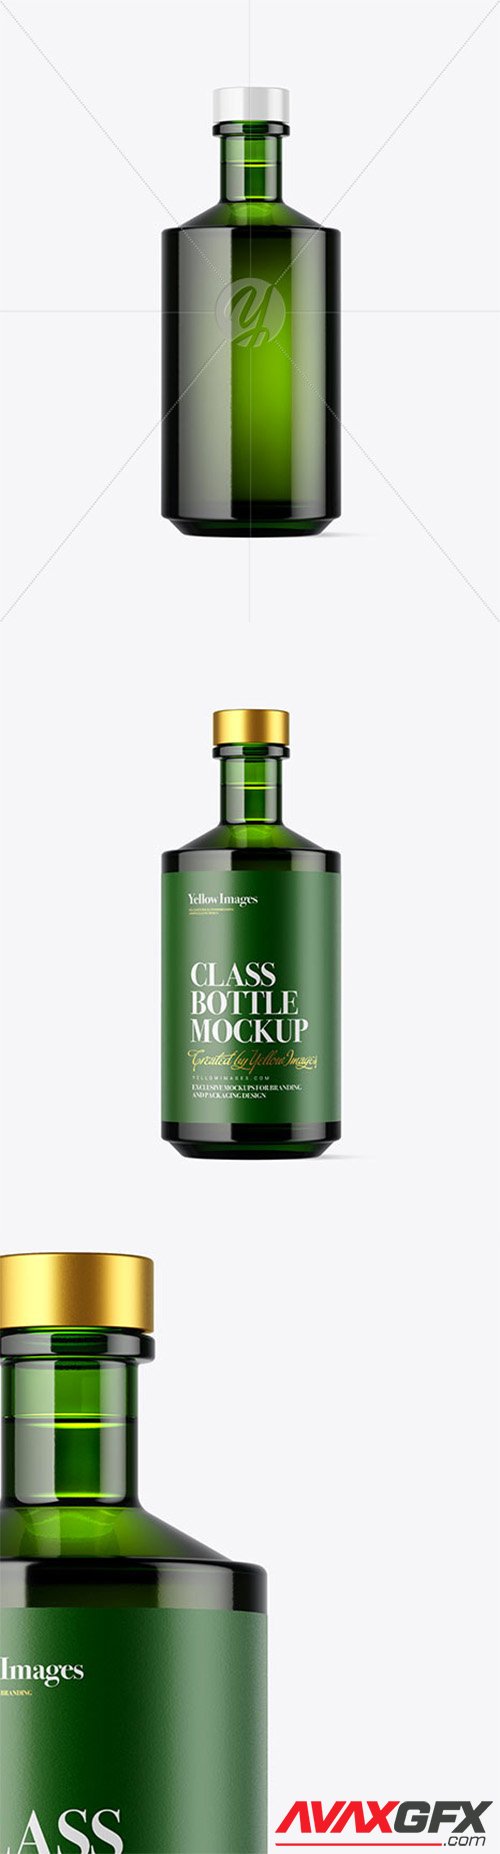 Green Glass Bottle Mockup 61602